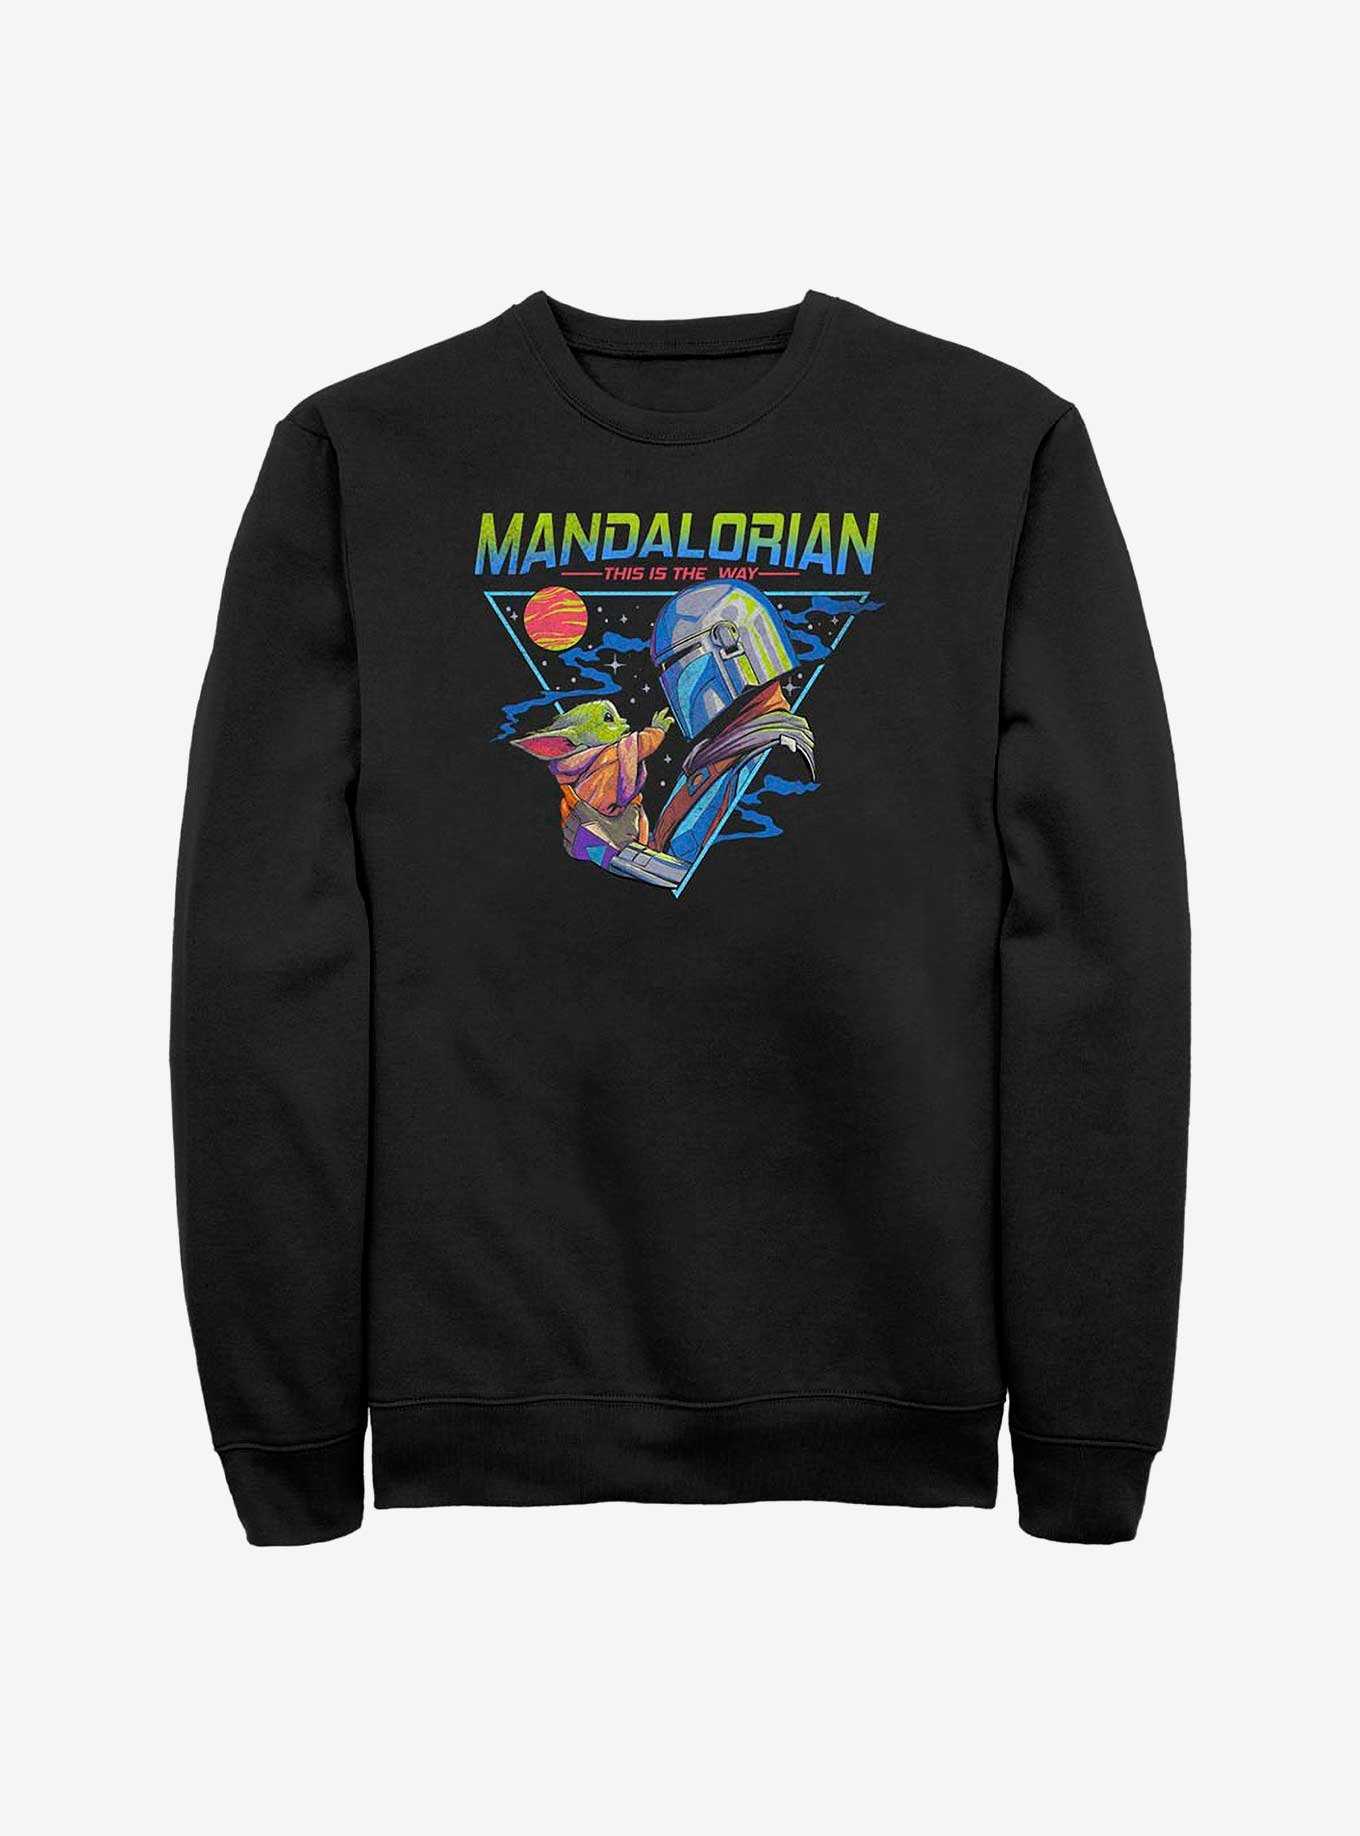 Star Wars The Mandalorian Grogu and Din Djarin Triangle Sweatshirt, , hi-res